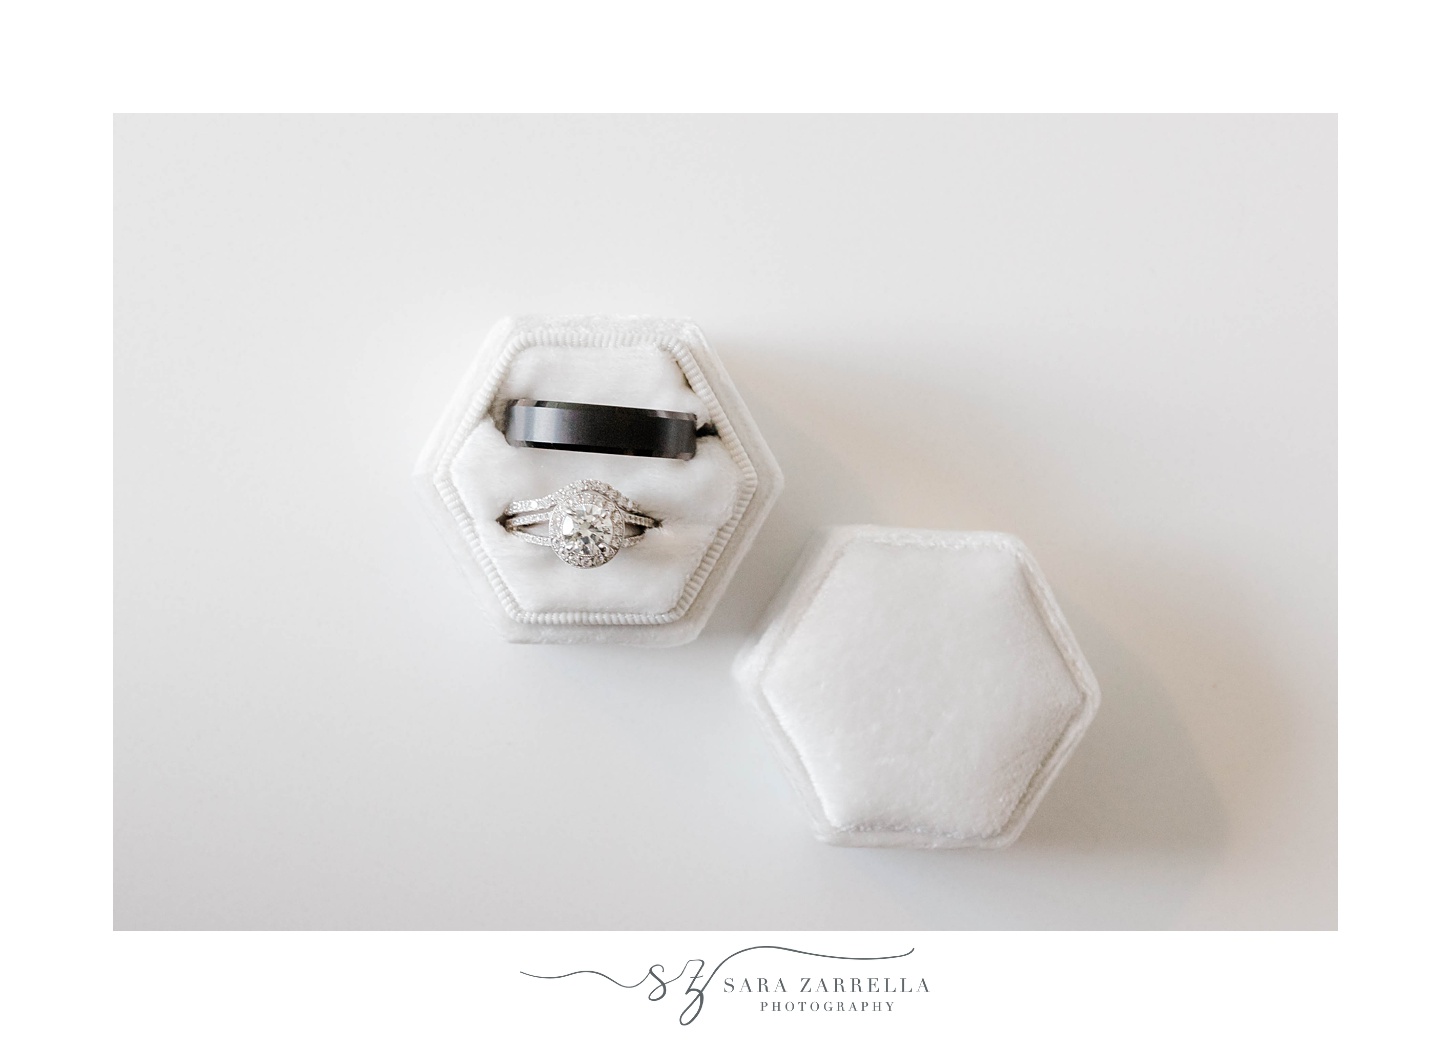 wedding rings rest in ivory box before Newport Beach House wedding